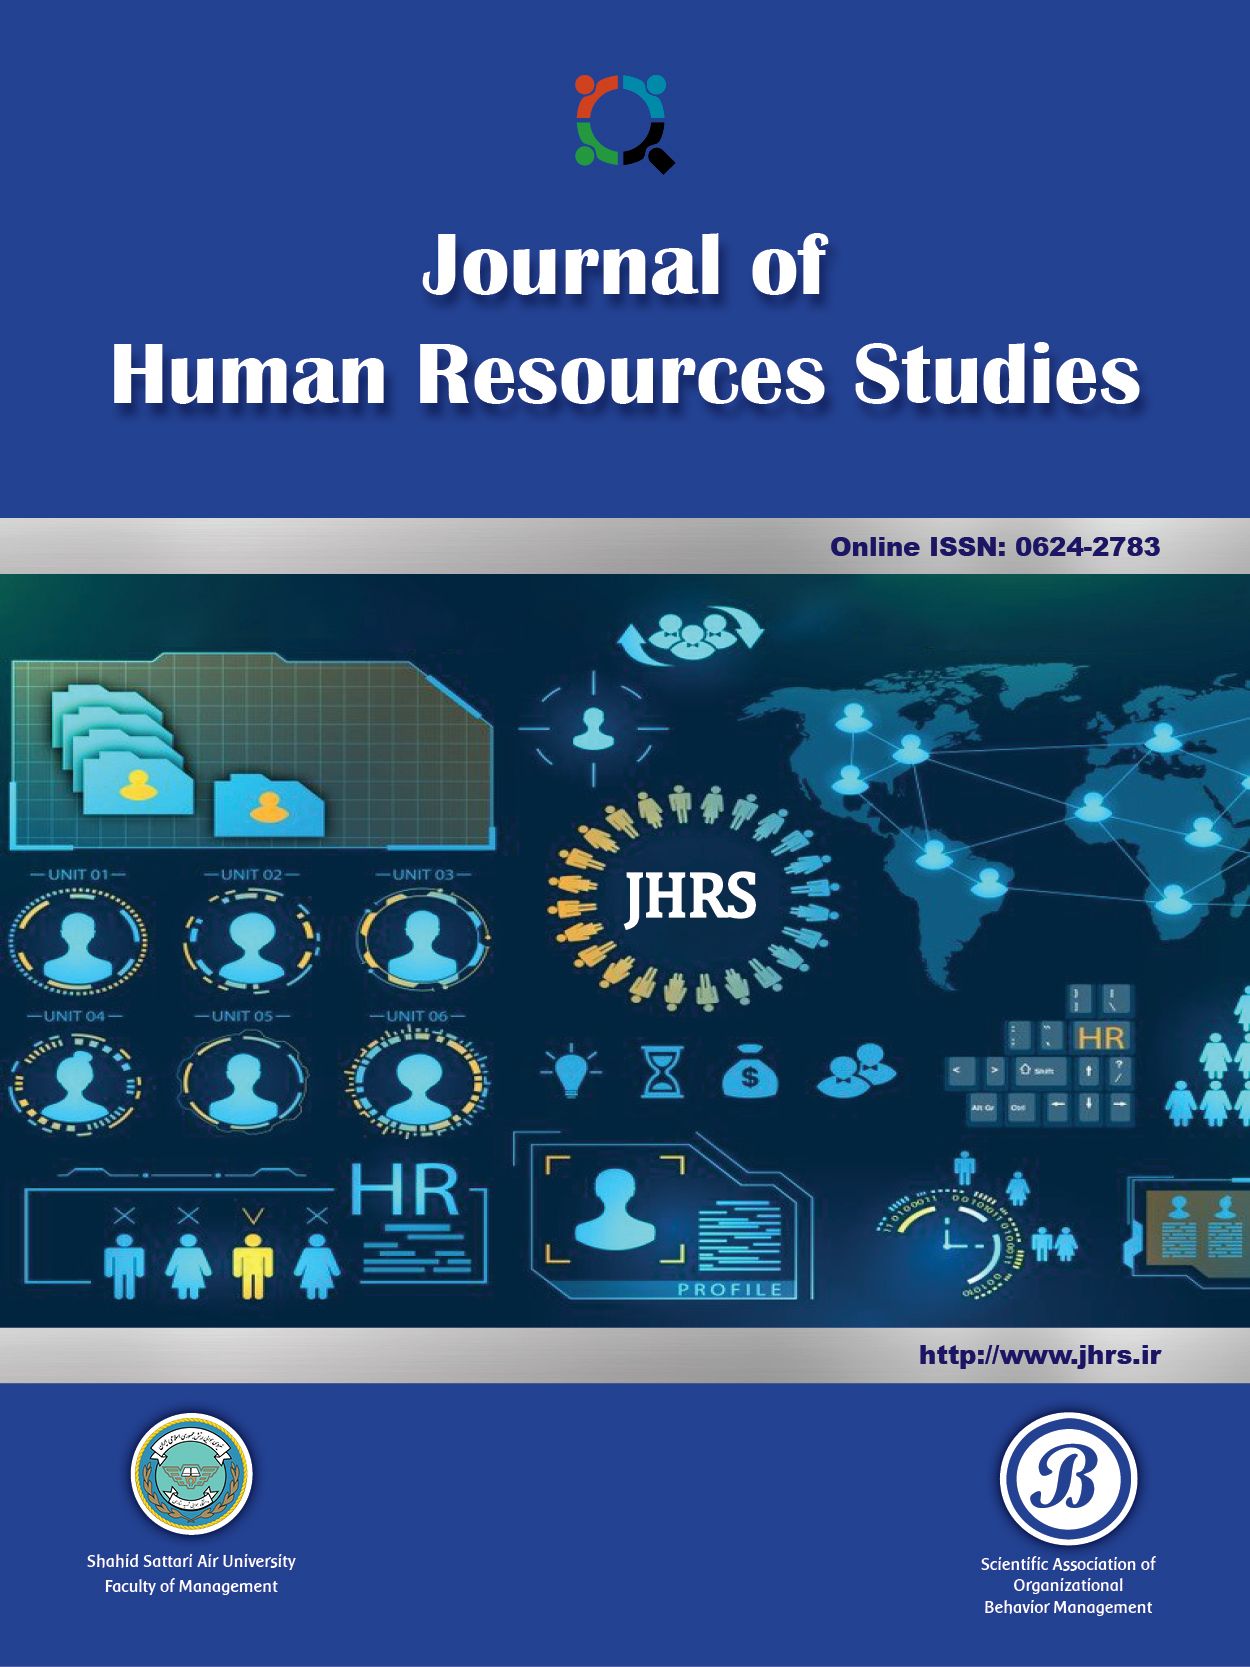 Journal of Human Resource Management